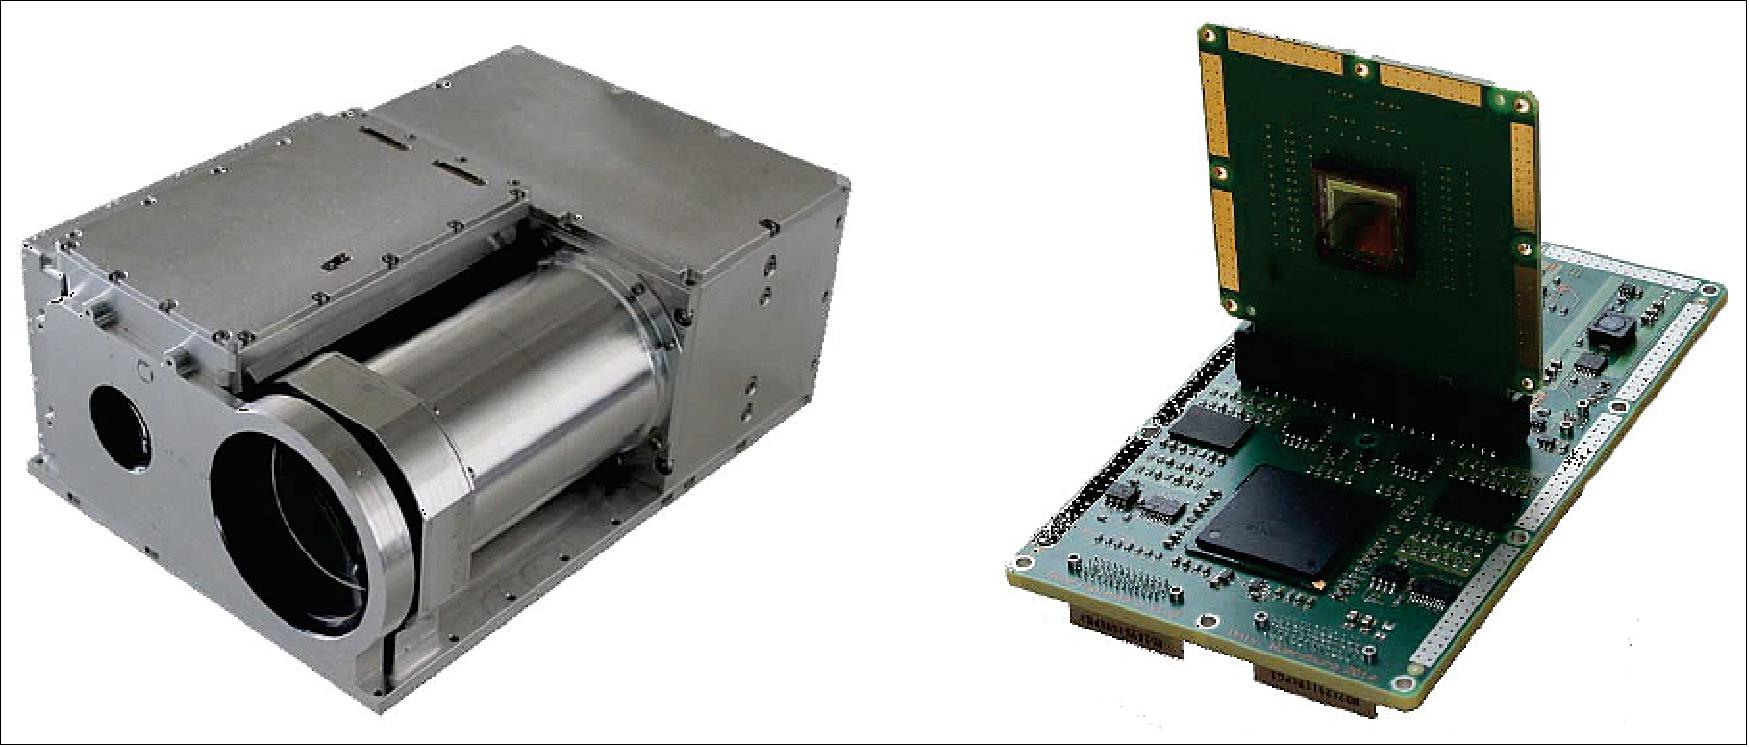 Figure 2: Left: Original ASAP system; Right: Reduced ASAP-Light system (image credit: University of Wuerzburg)